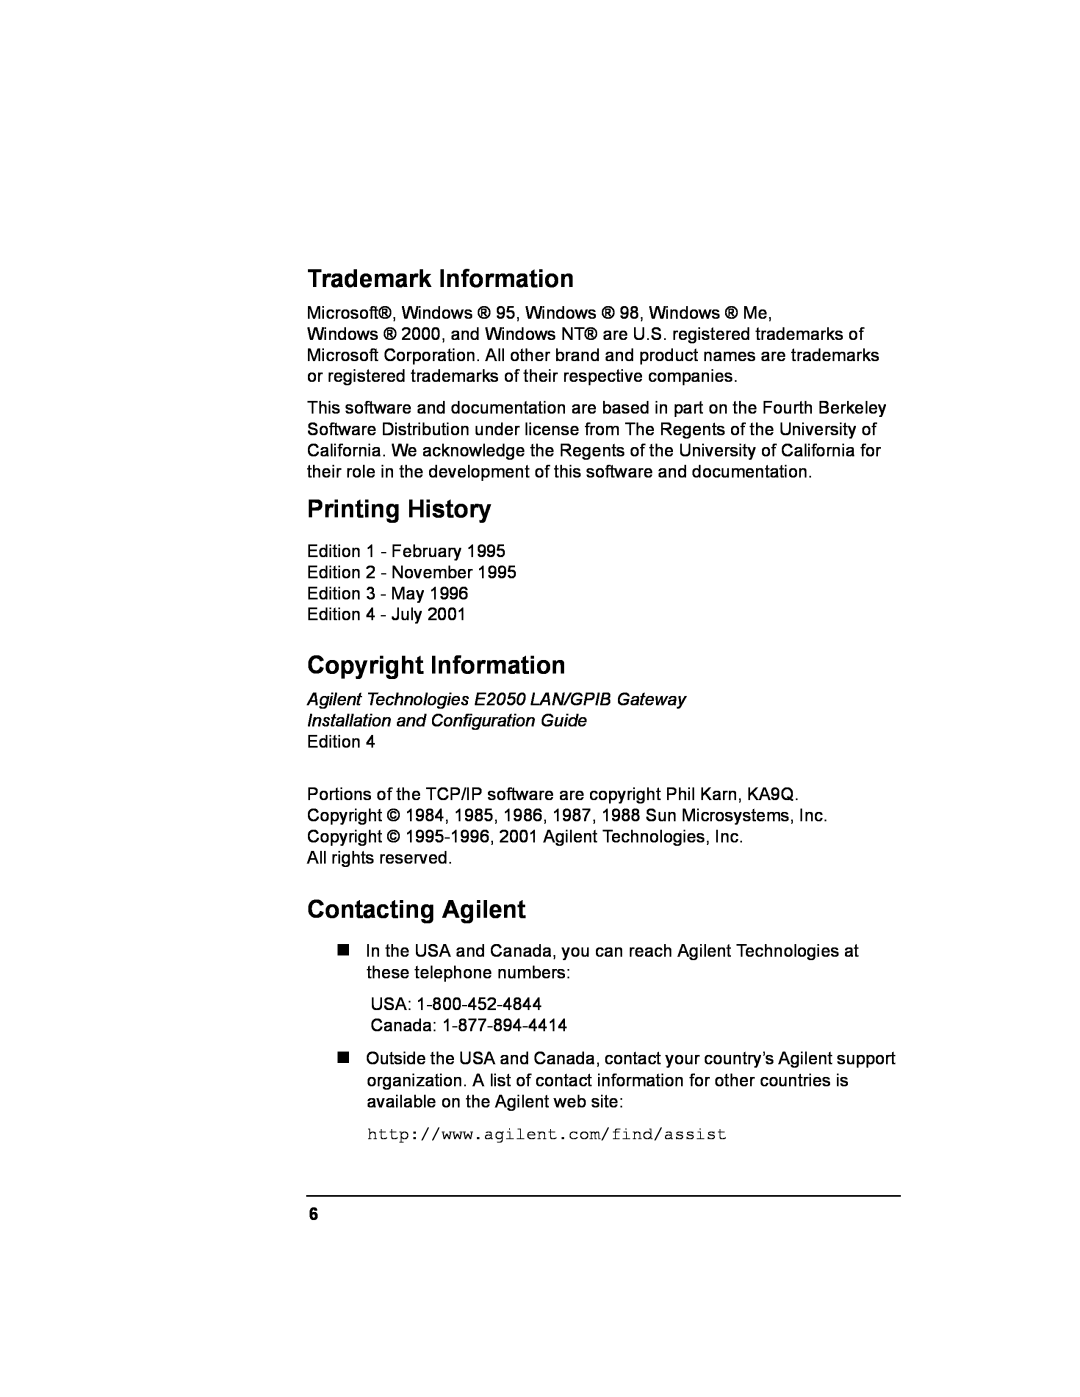 Agilent Technologies E2050-90003 manual Trademark Information, Printing History, Copyright Information, Contacting Agilent 